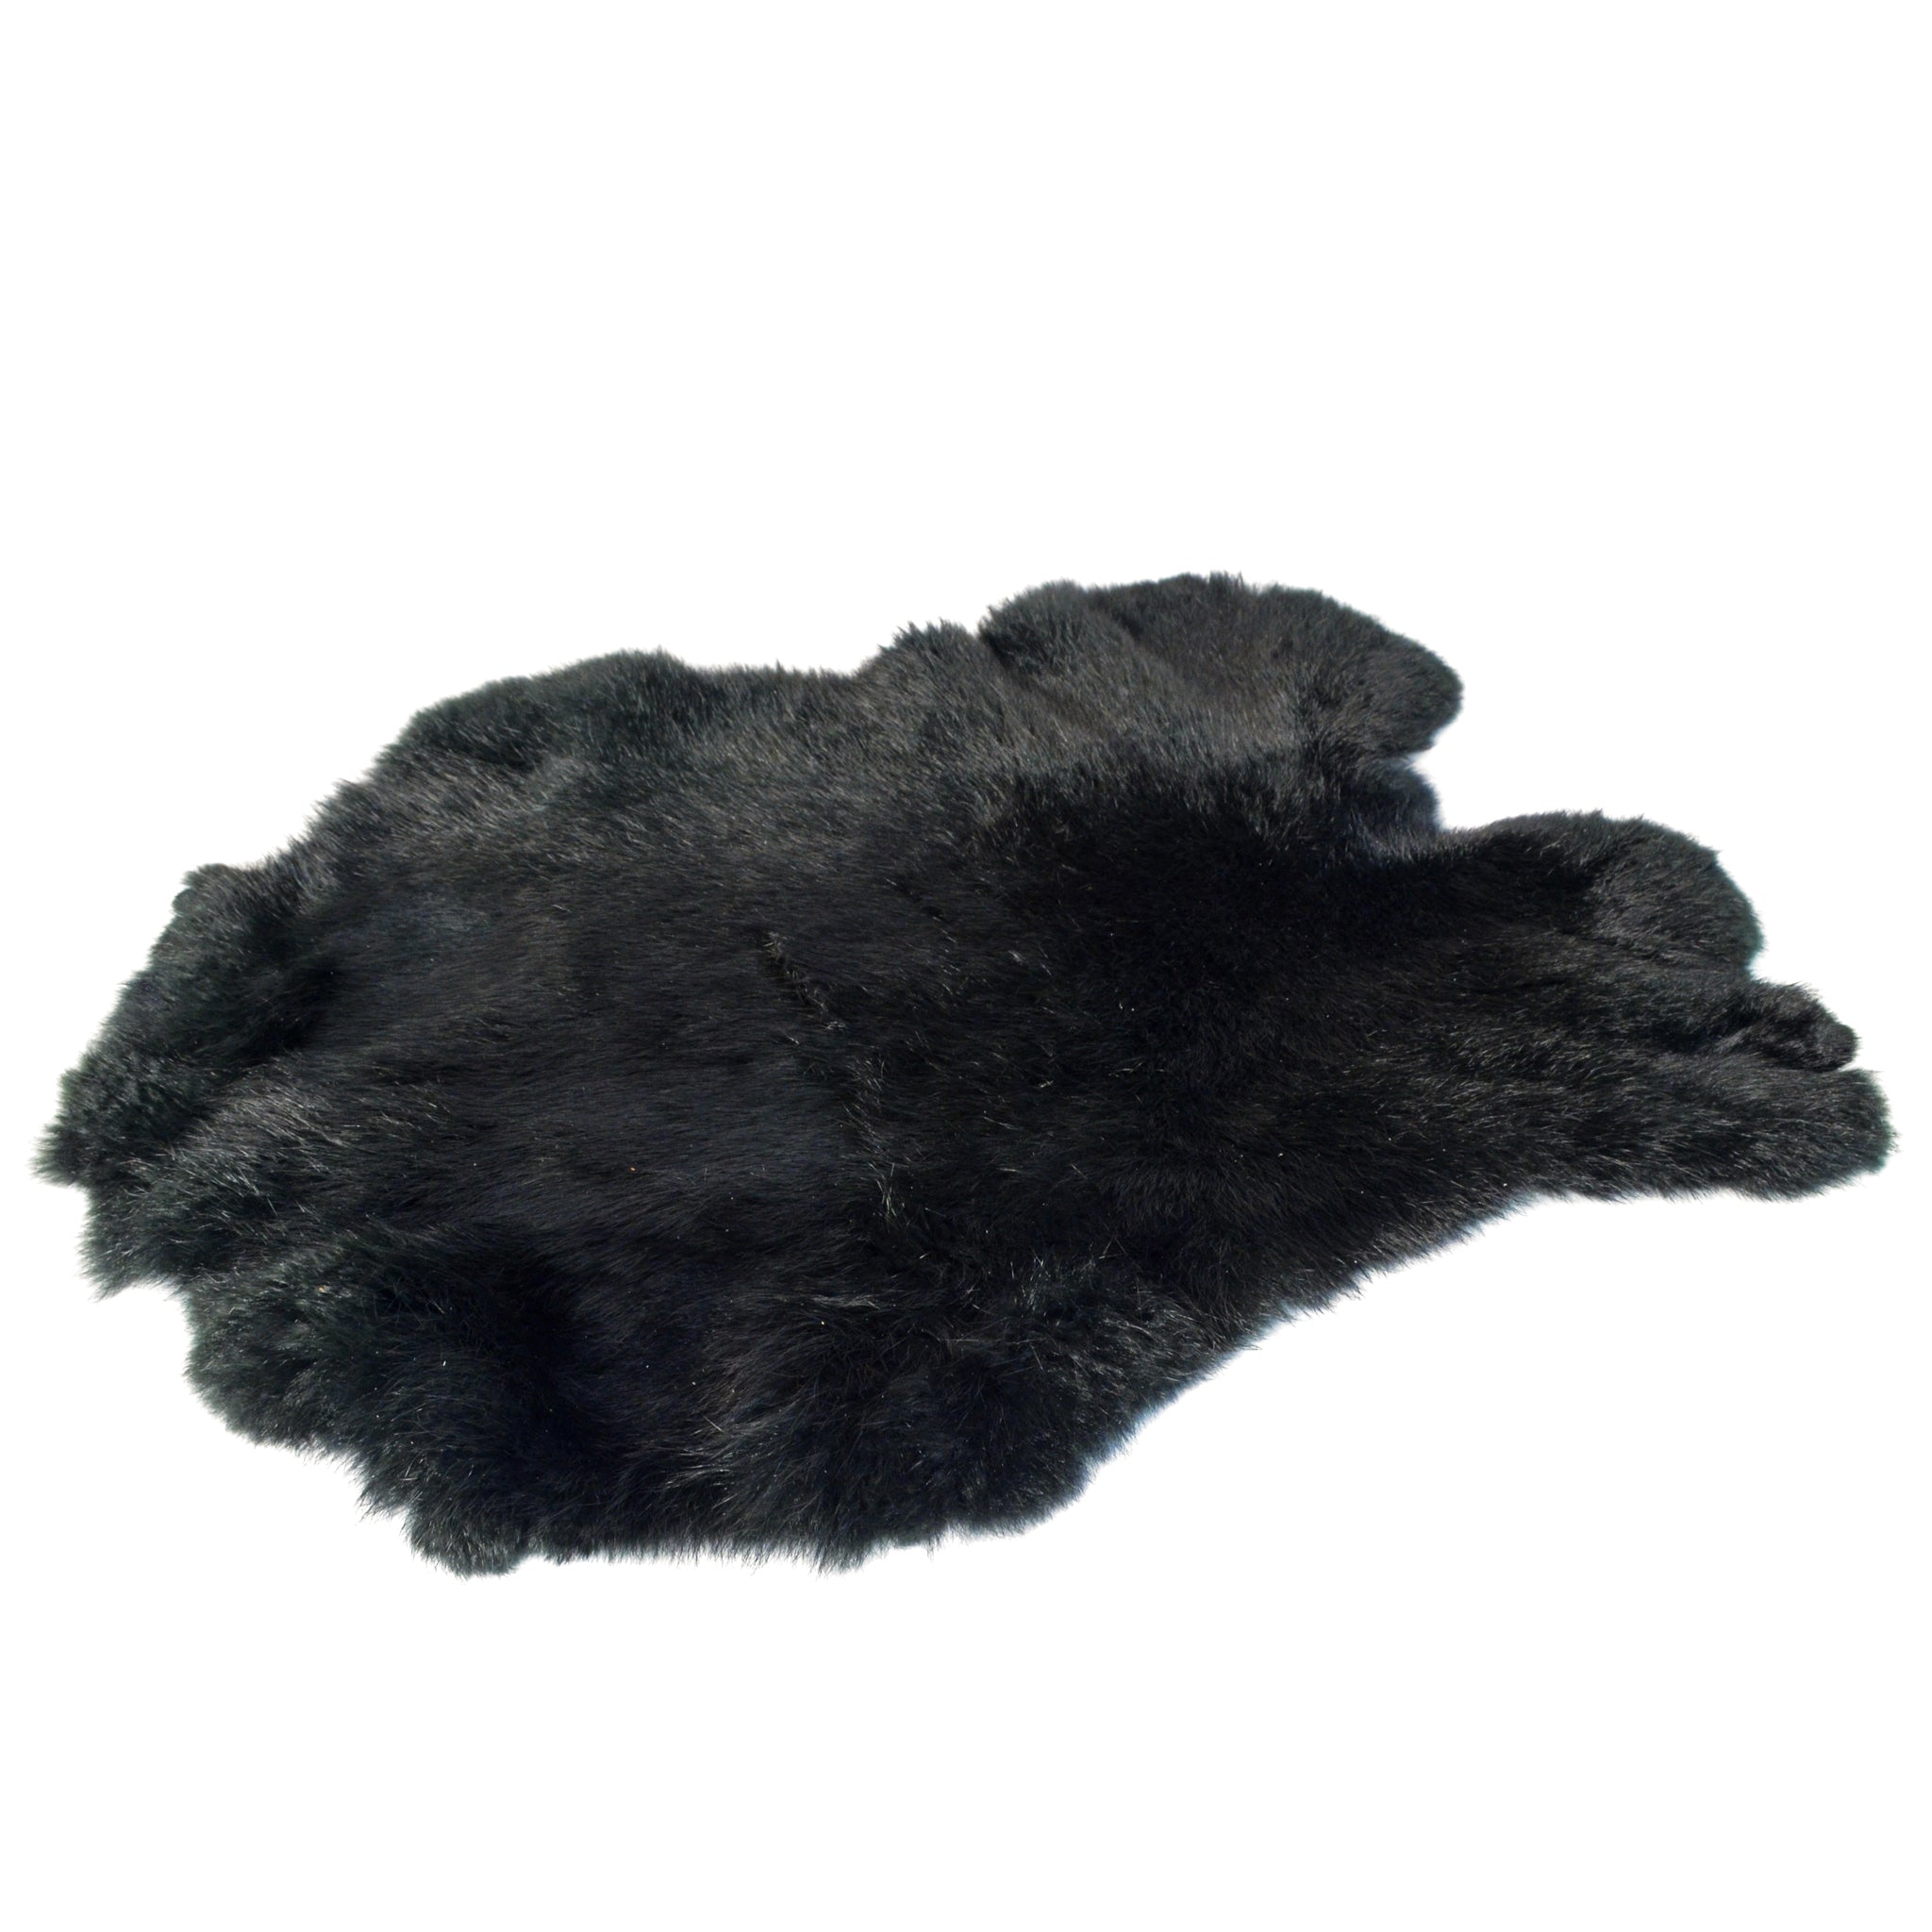 Black Rabbit Skins from Identity Leathercraft